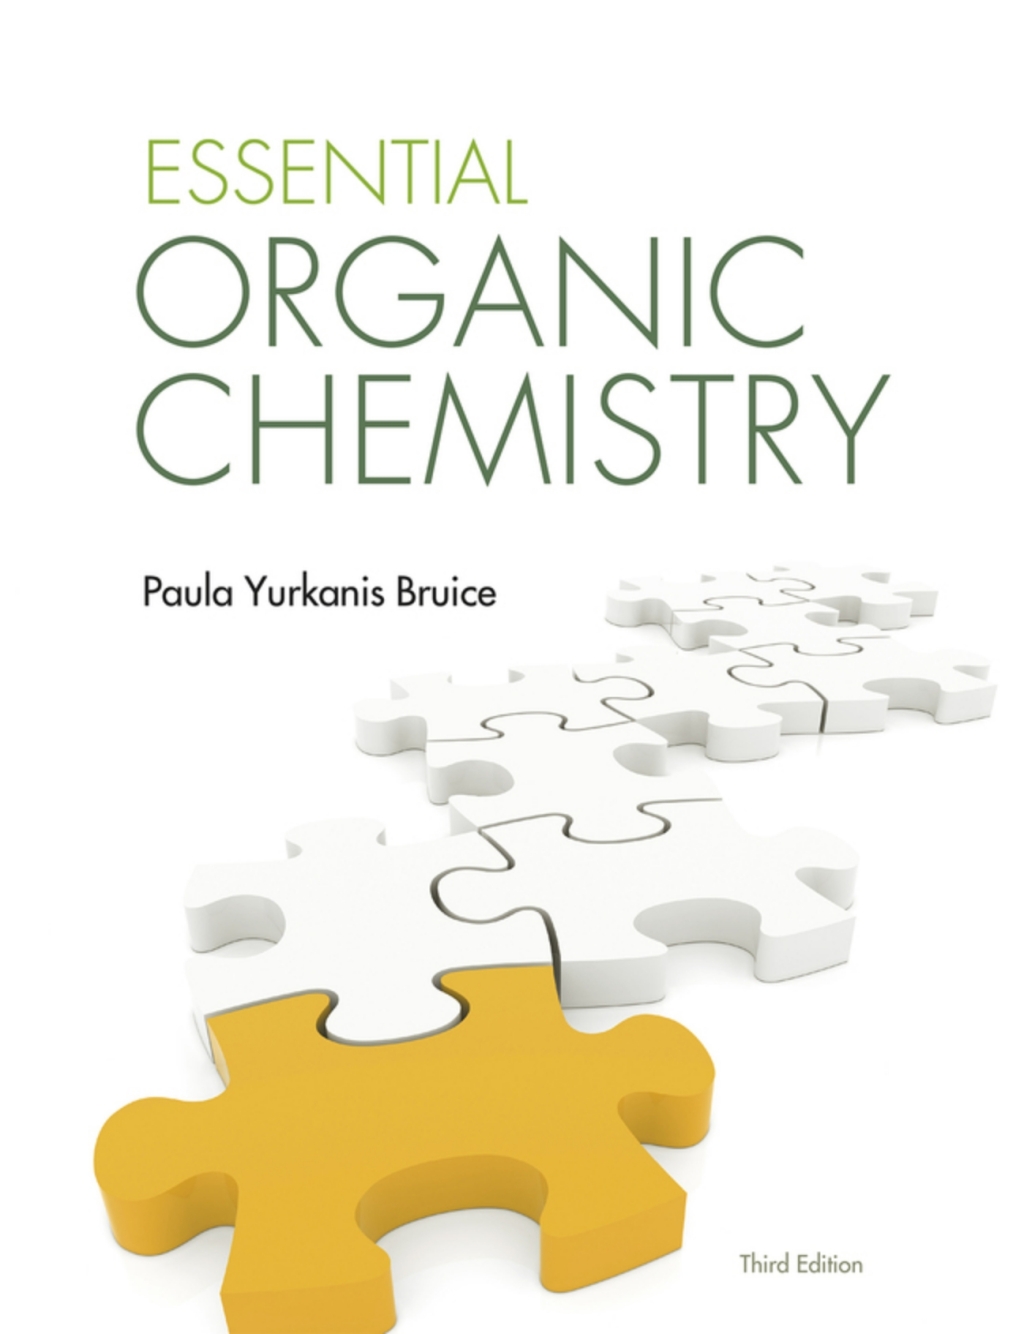 Essential Organic Chemistry (Pearson+) - 3rd Edition (CourseWare Rental)